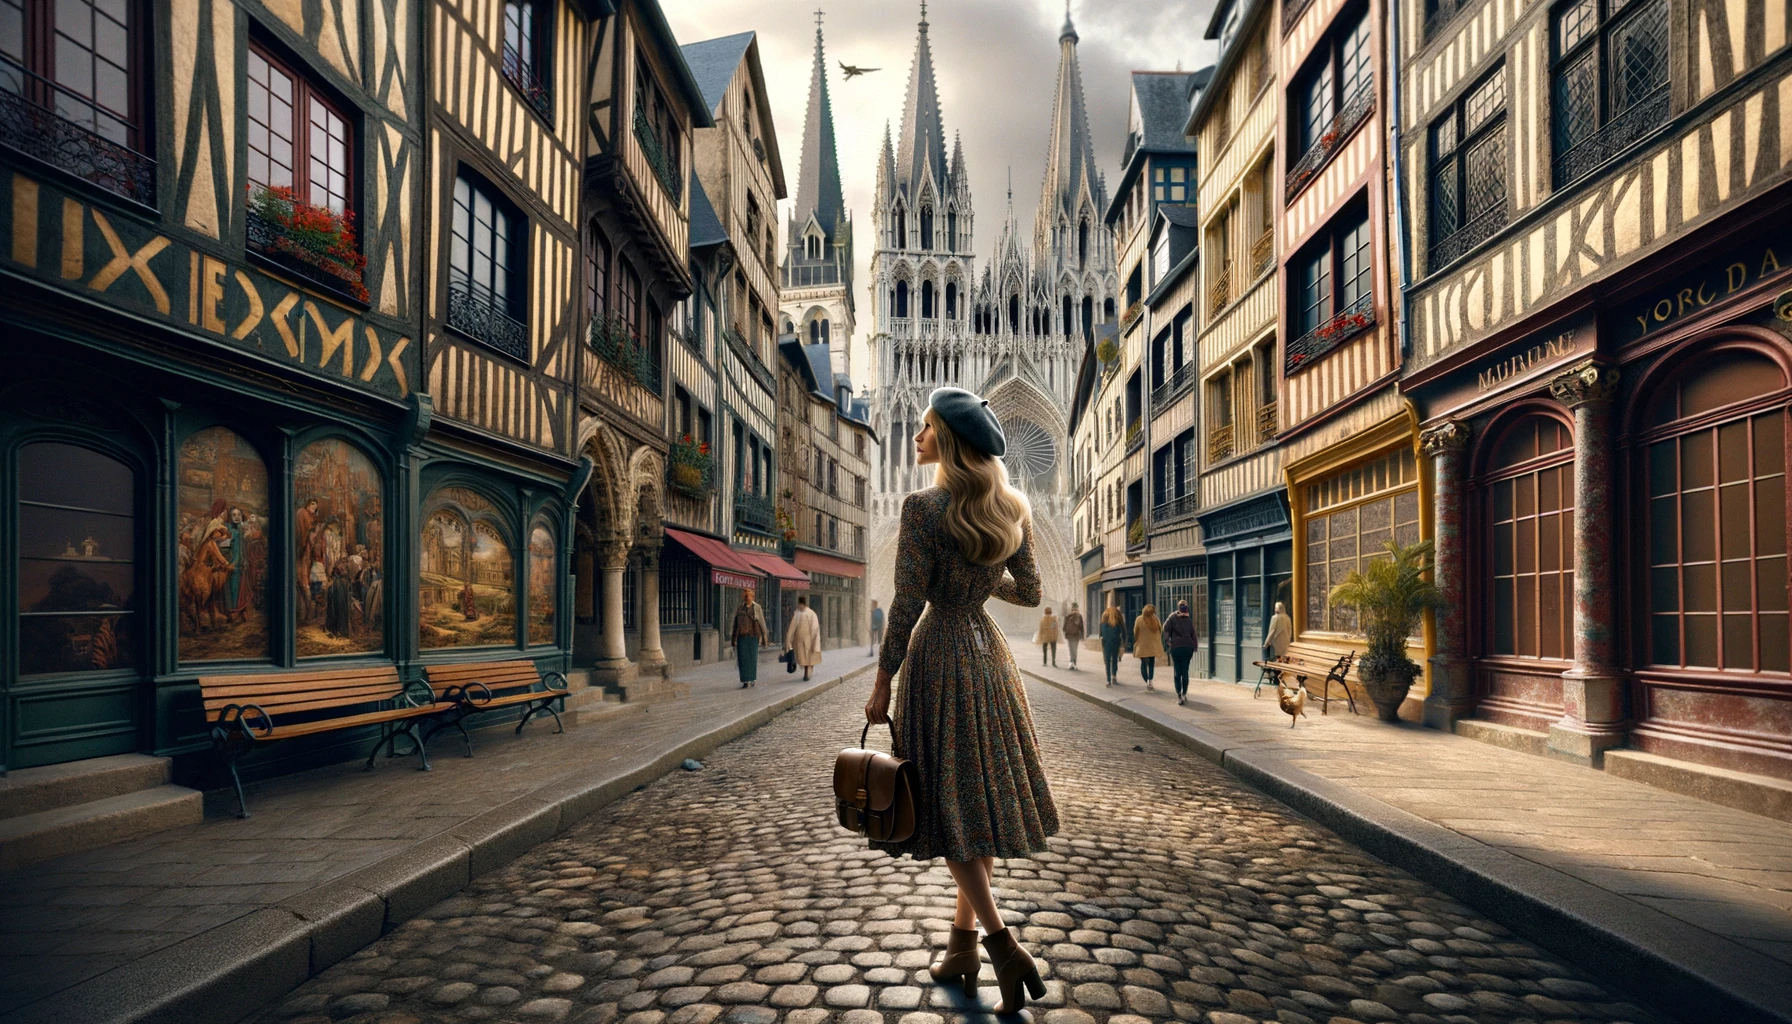  photo-realistic scene of Kathy Fields exploring the medieval splendor of Rouen. 